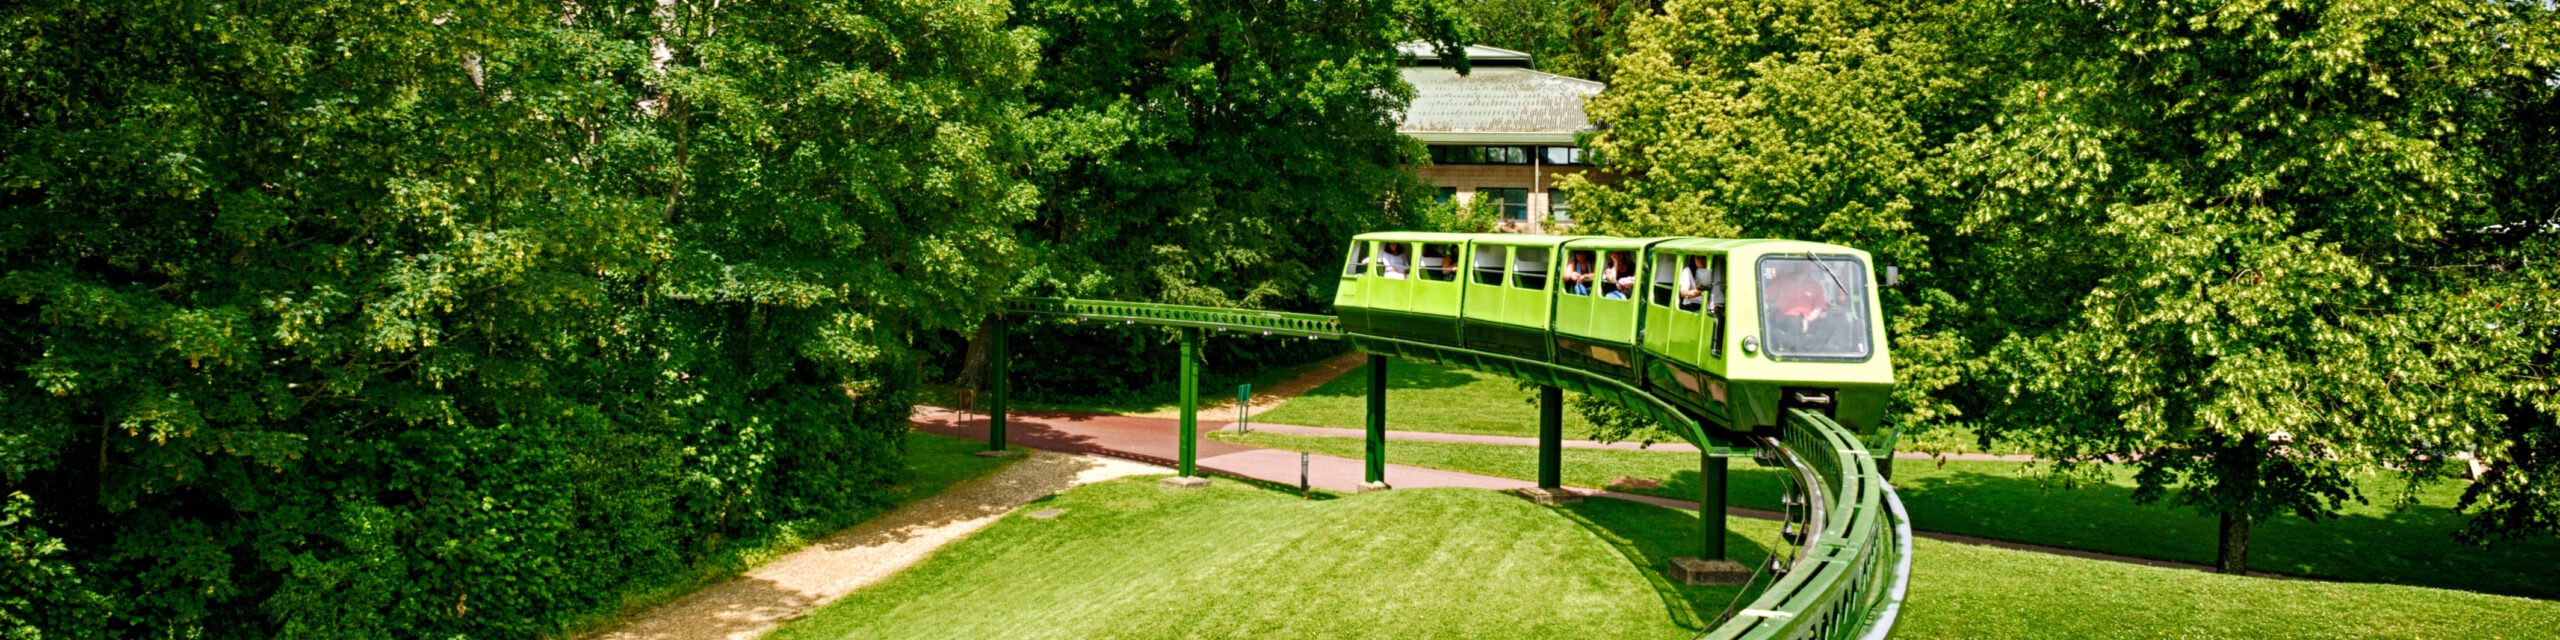 Beaulieu's monorail celebrates its 50th anniversary